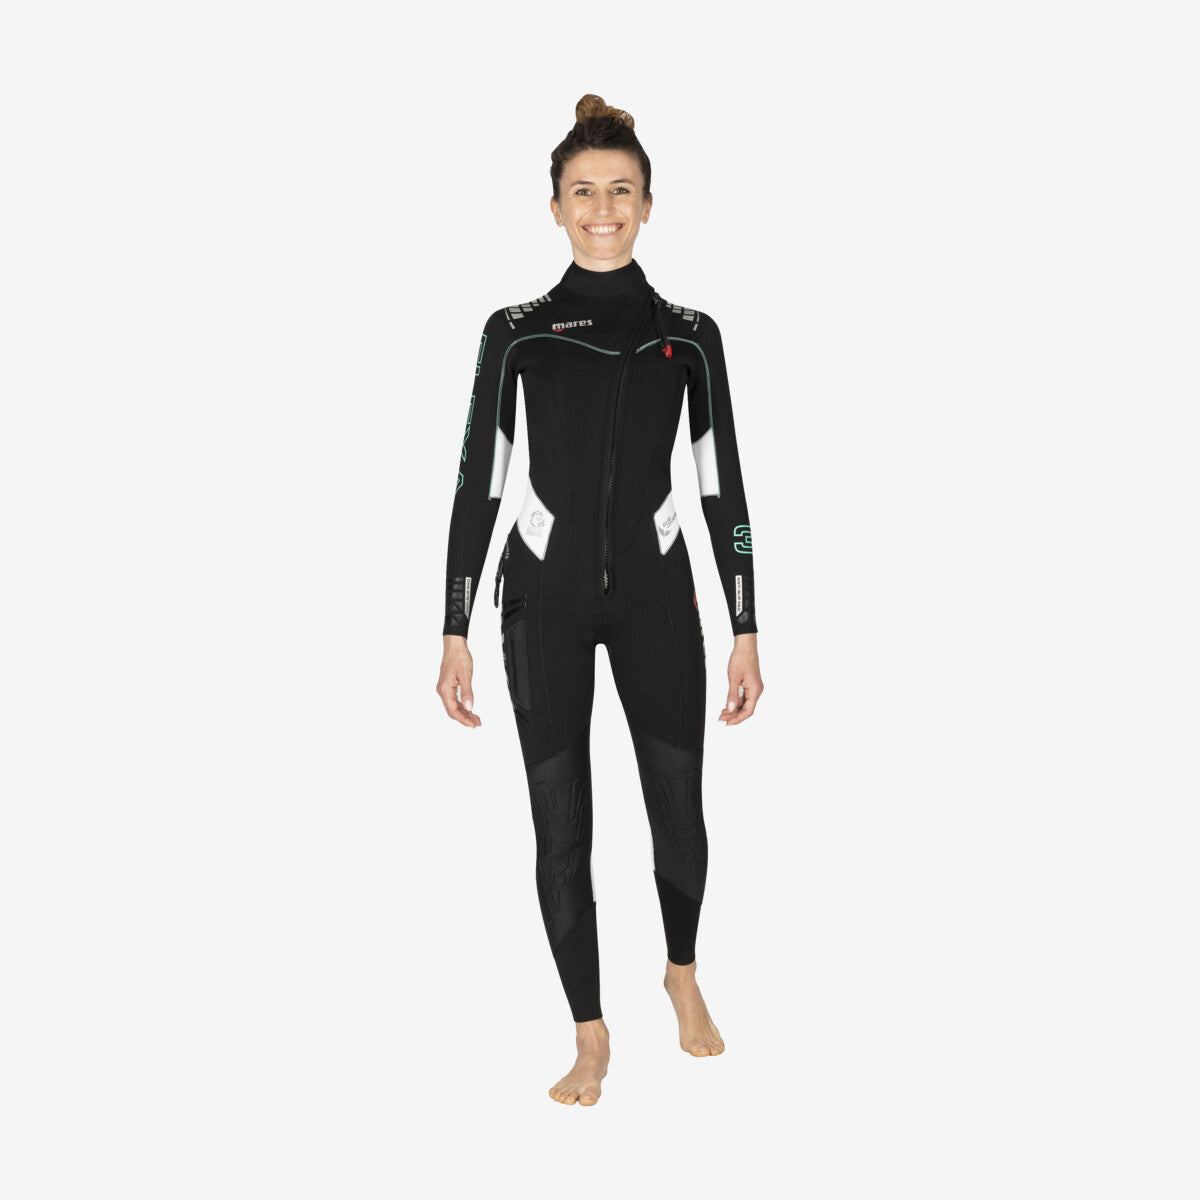 MARES Wetsuit Flexa 3/2 She Dives חליפת צלילה ארוכה לנשים